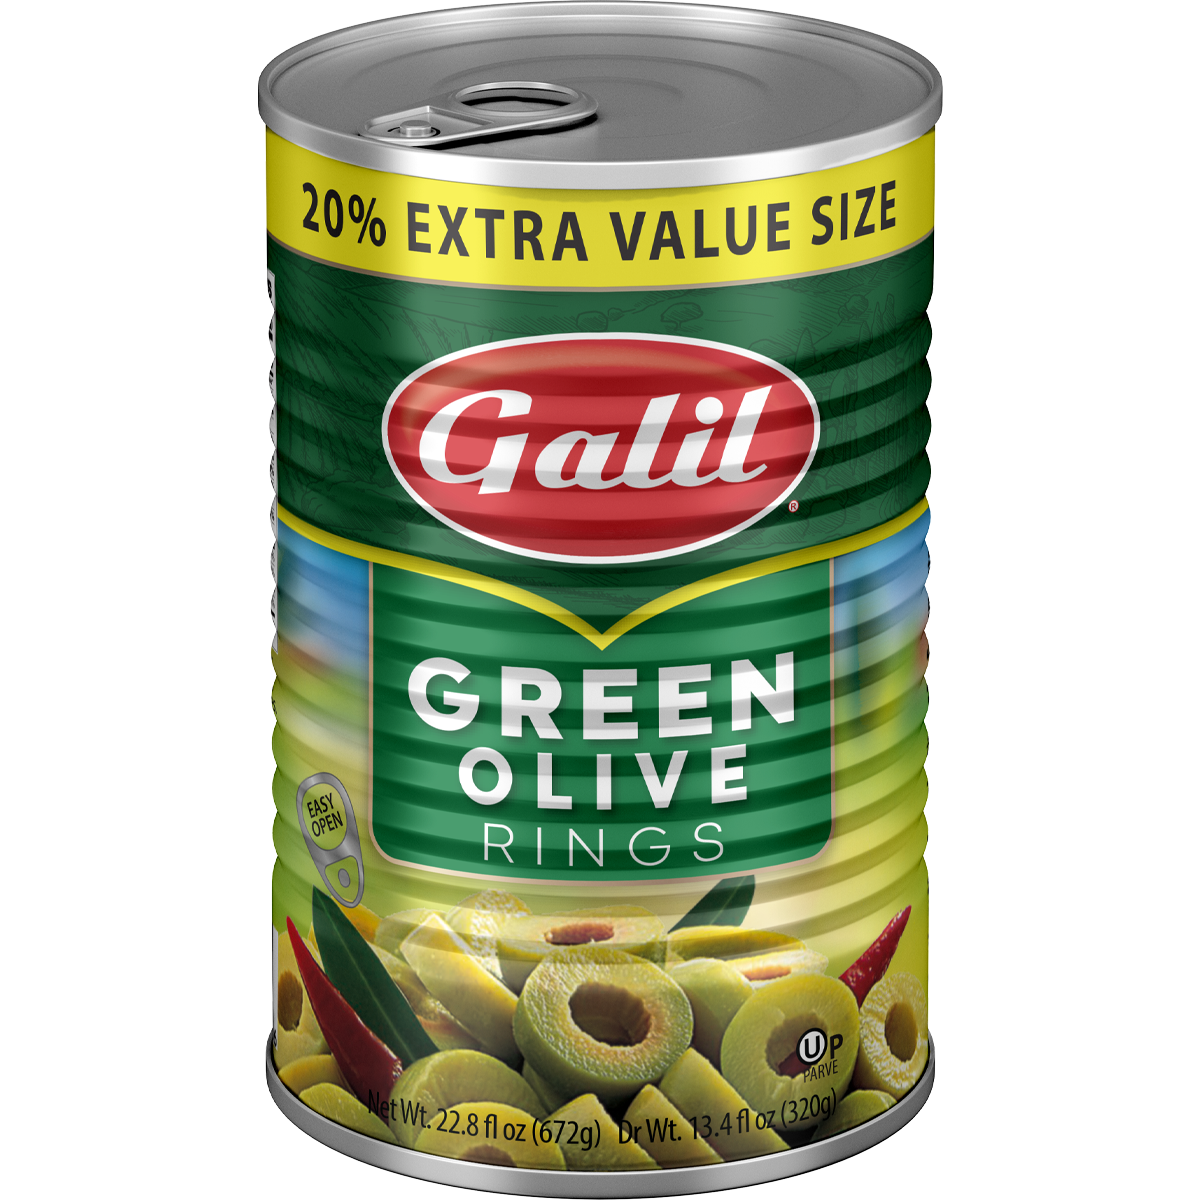 Green Olives | Rings | 19 oz | Galil